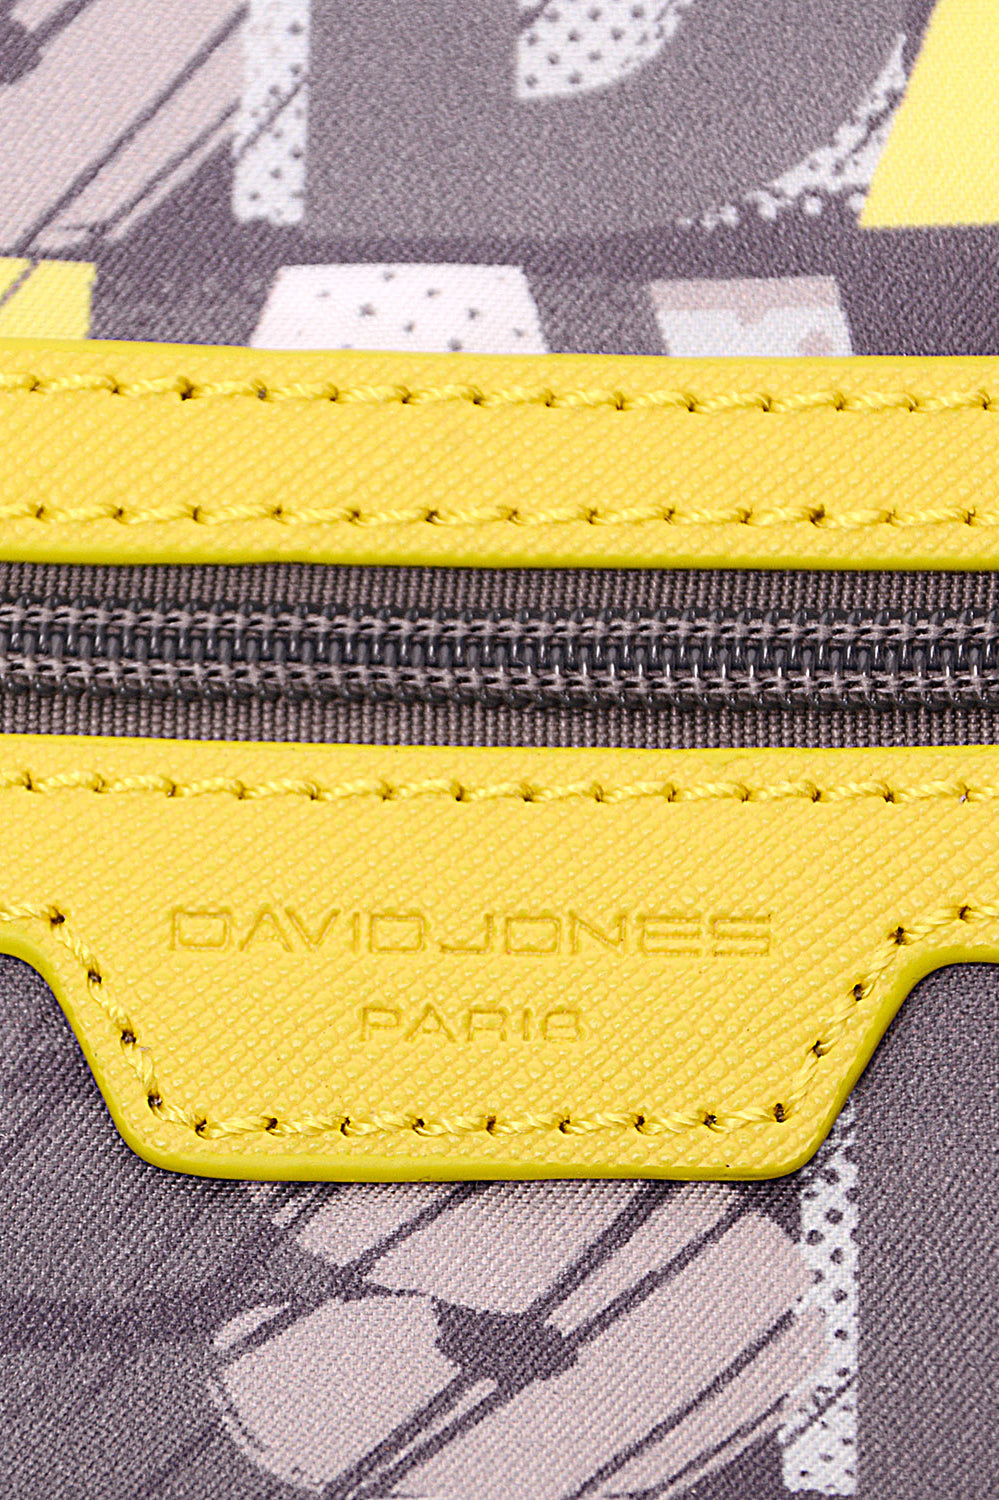 David Jones PU Leather Large Tote Bag Trendsi